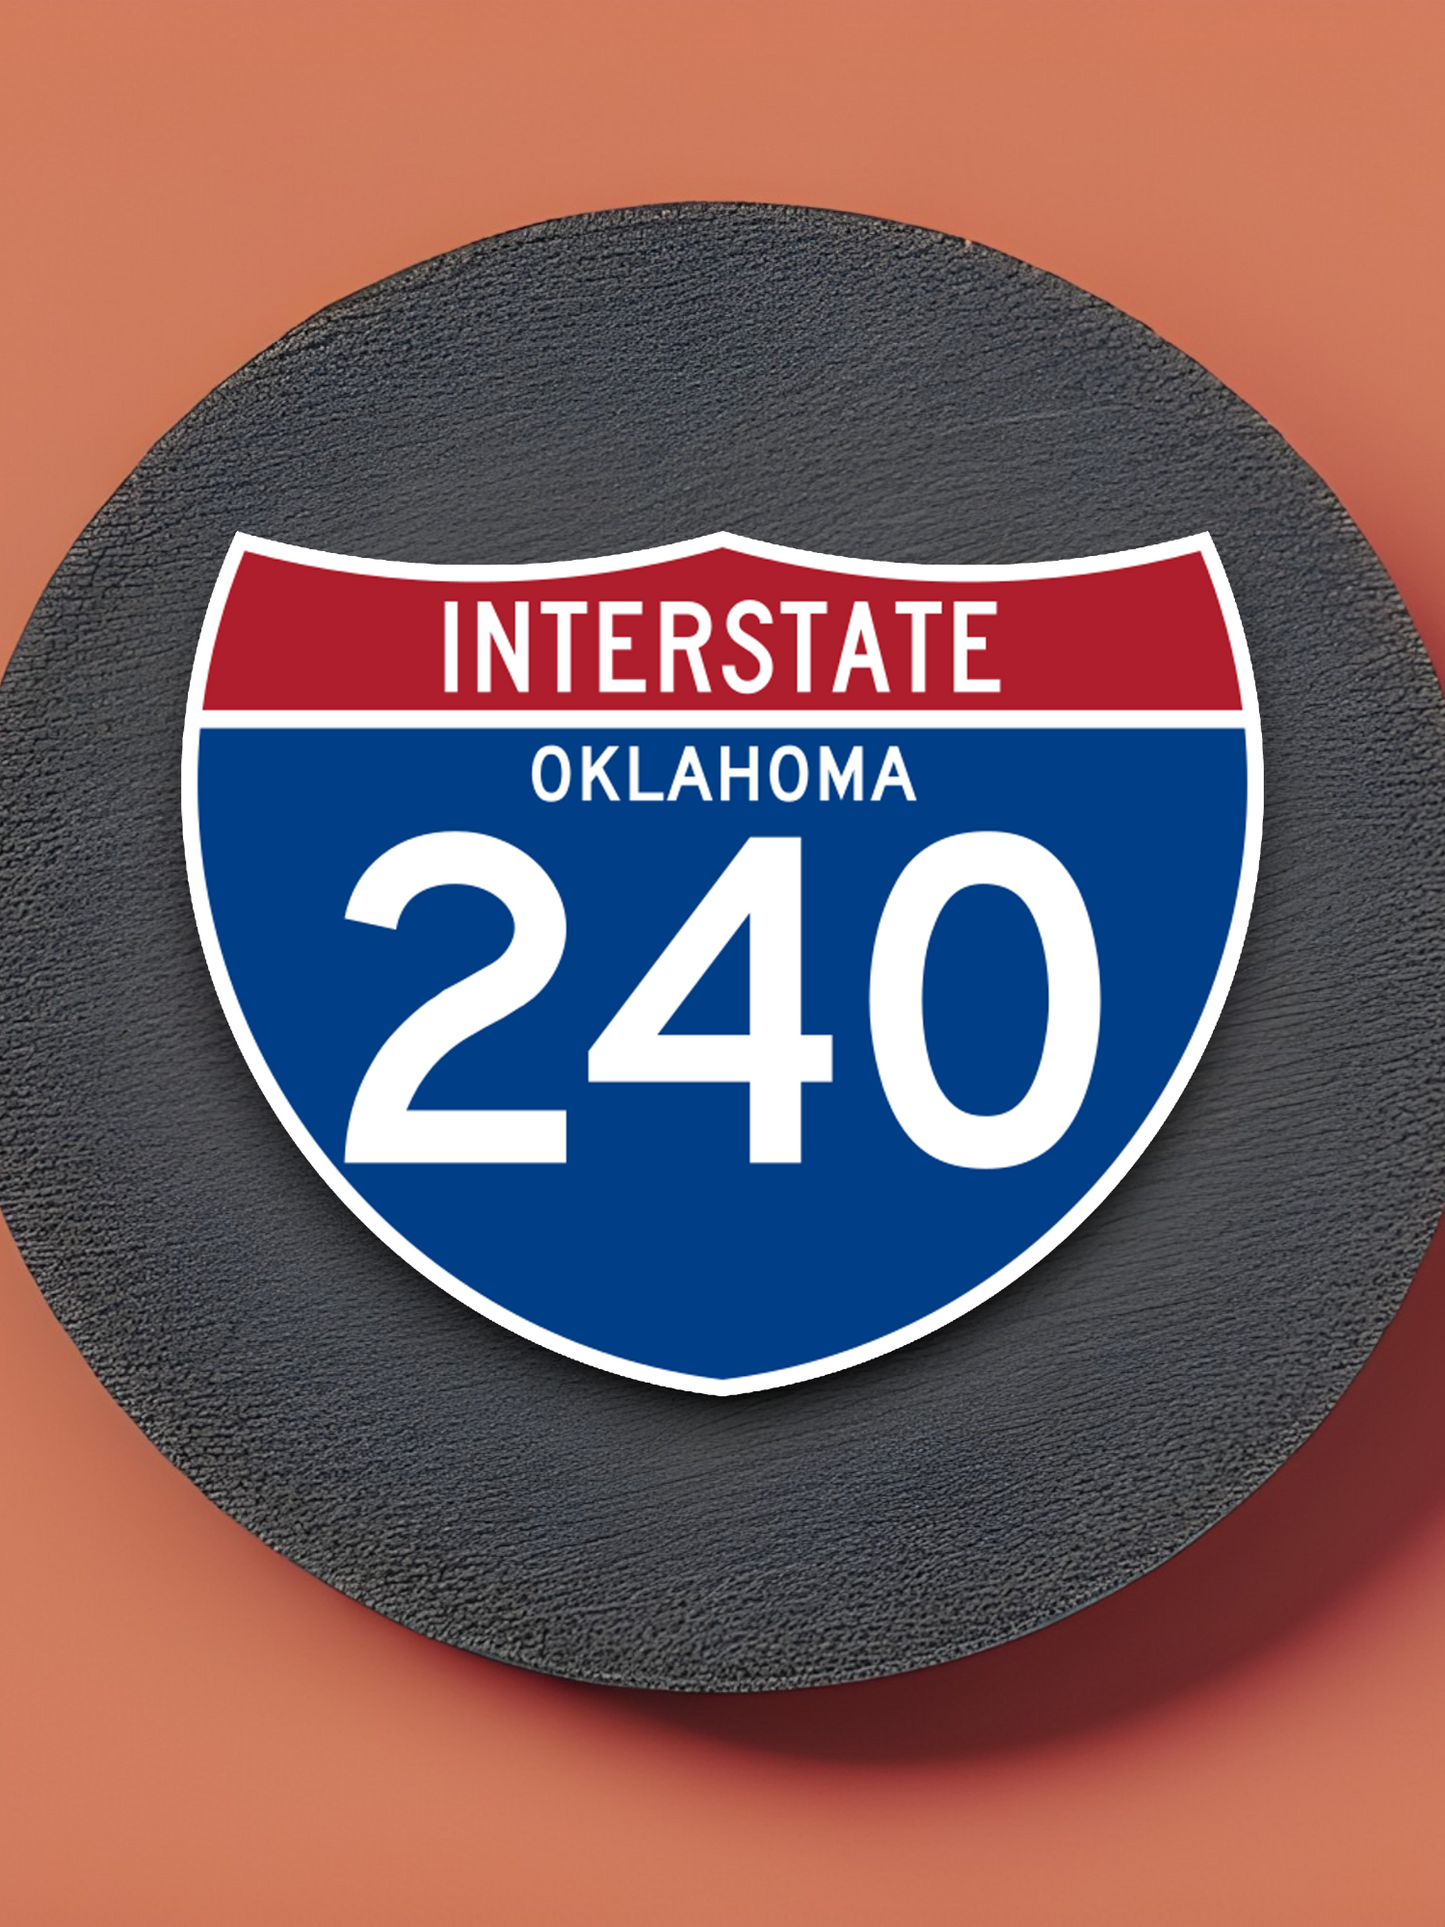 Interstate I-240 Oklahoma Road Sign Sticker